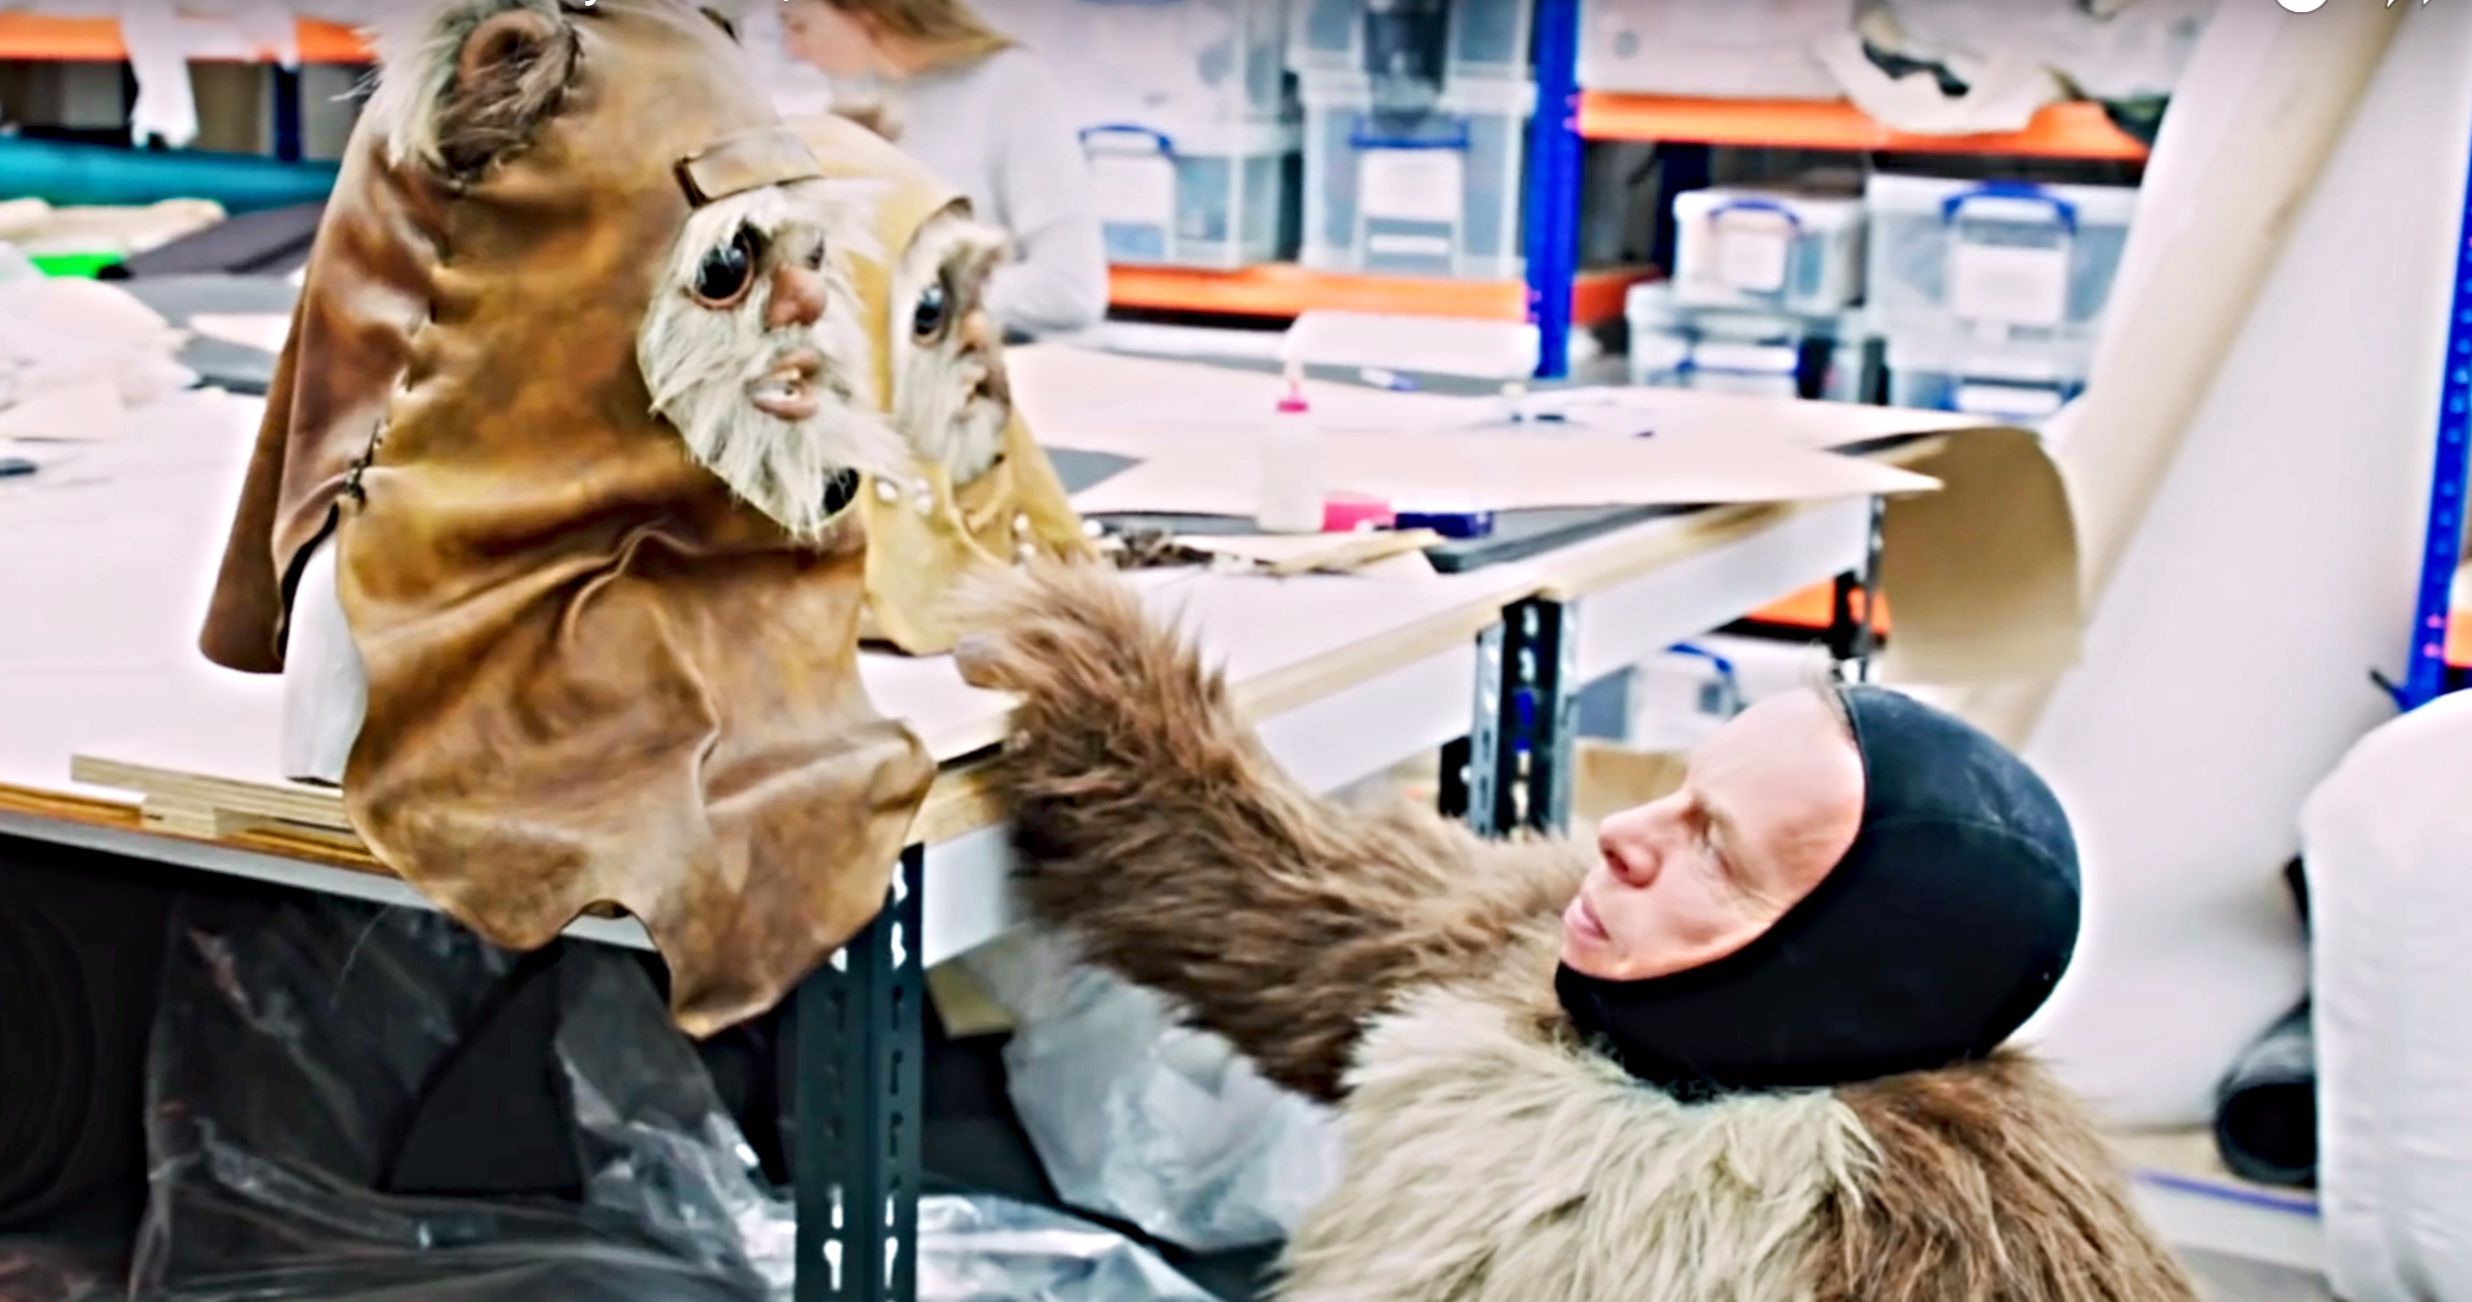 Wicket the Ewok's Return Teased in New Star Wars 9 Featurette